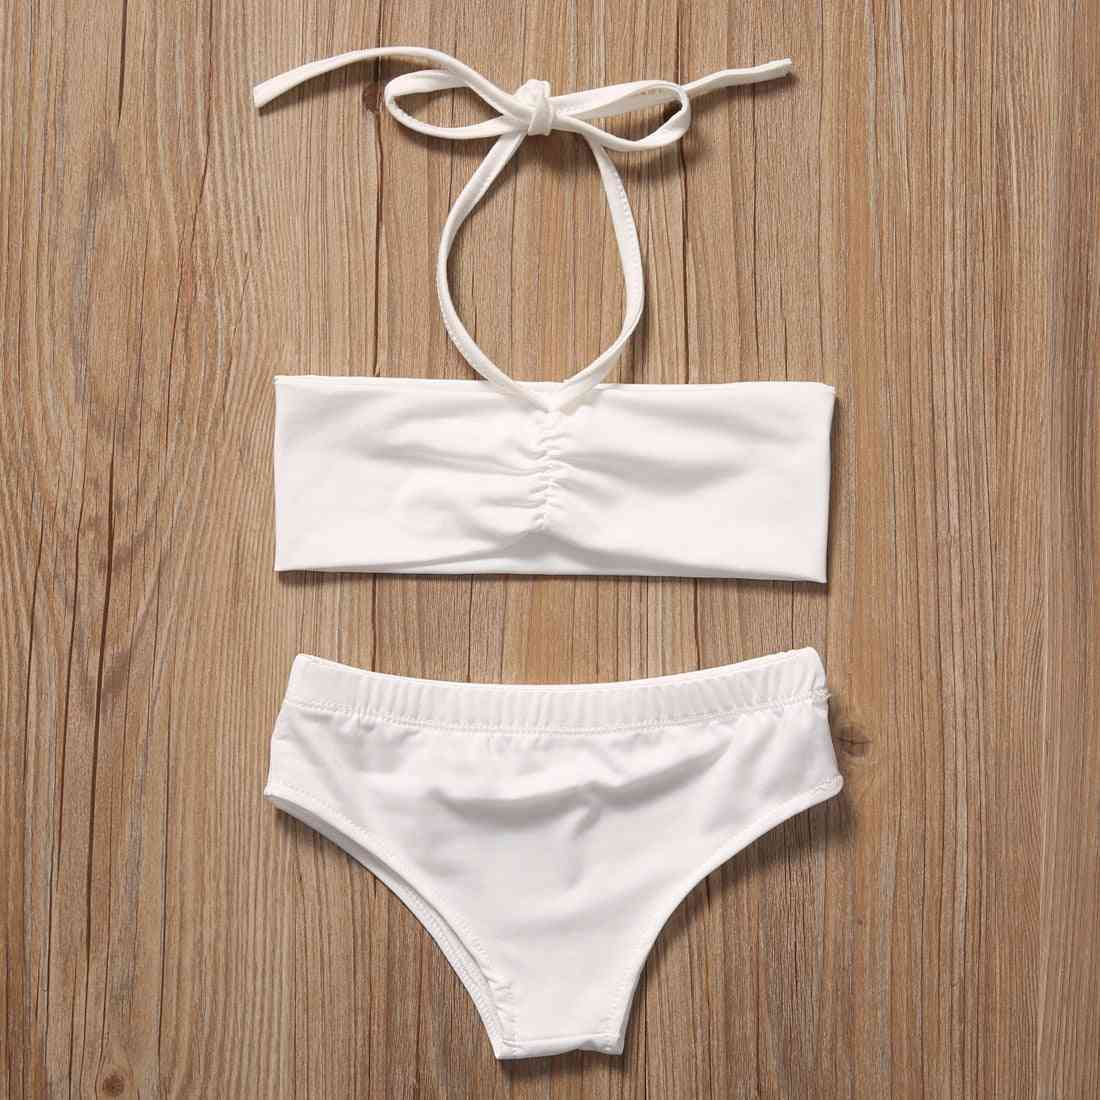 Summer Lace Suit Bikini - Swimsuit Beachwear Clothes For